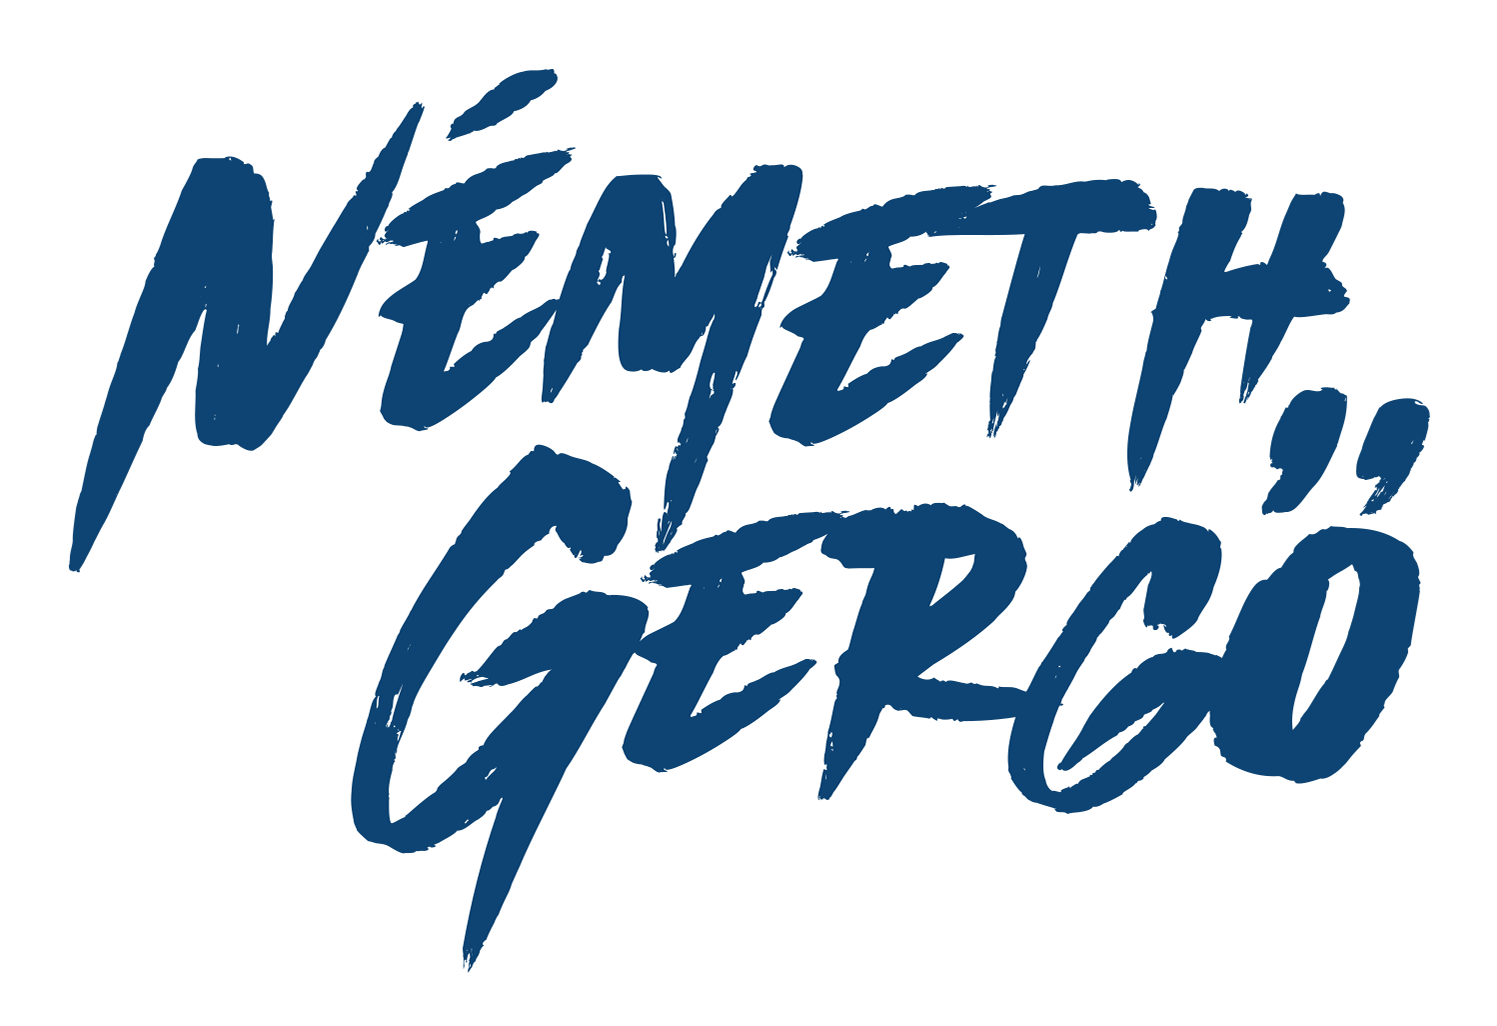 Gergo Nemeth